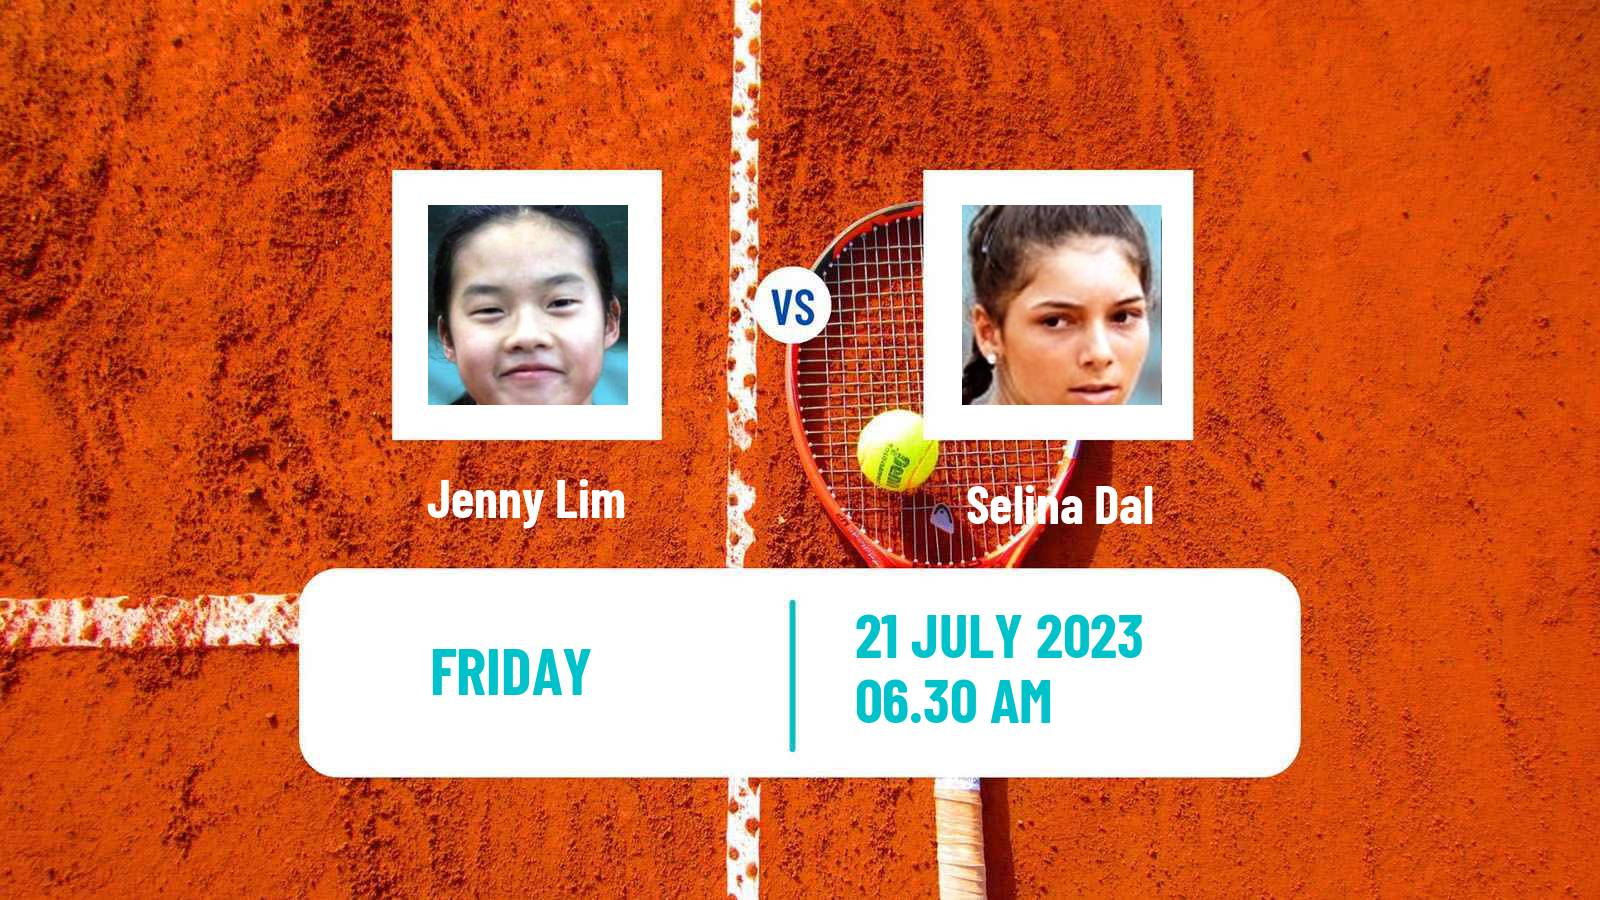 Tennis ITF W15 Les Contamines Montjoie Women Jenny Lim - Selina Dal